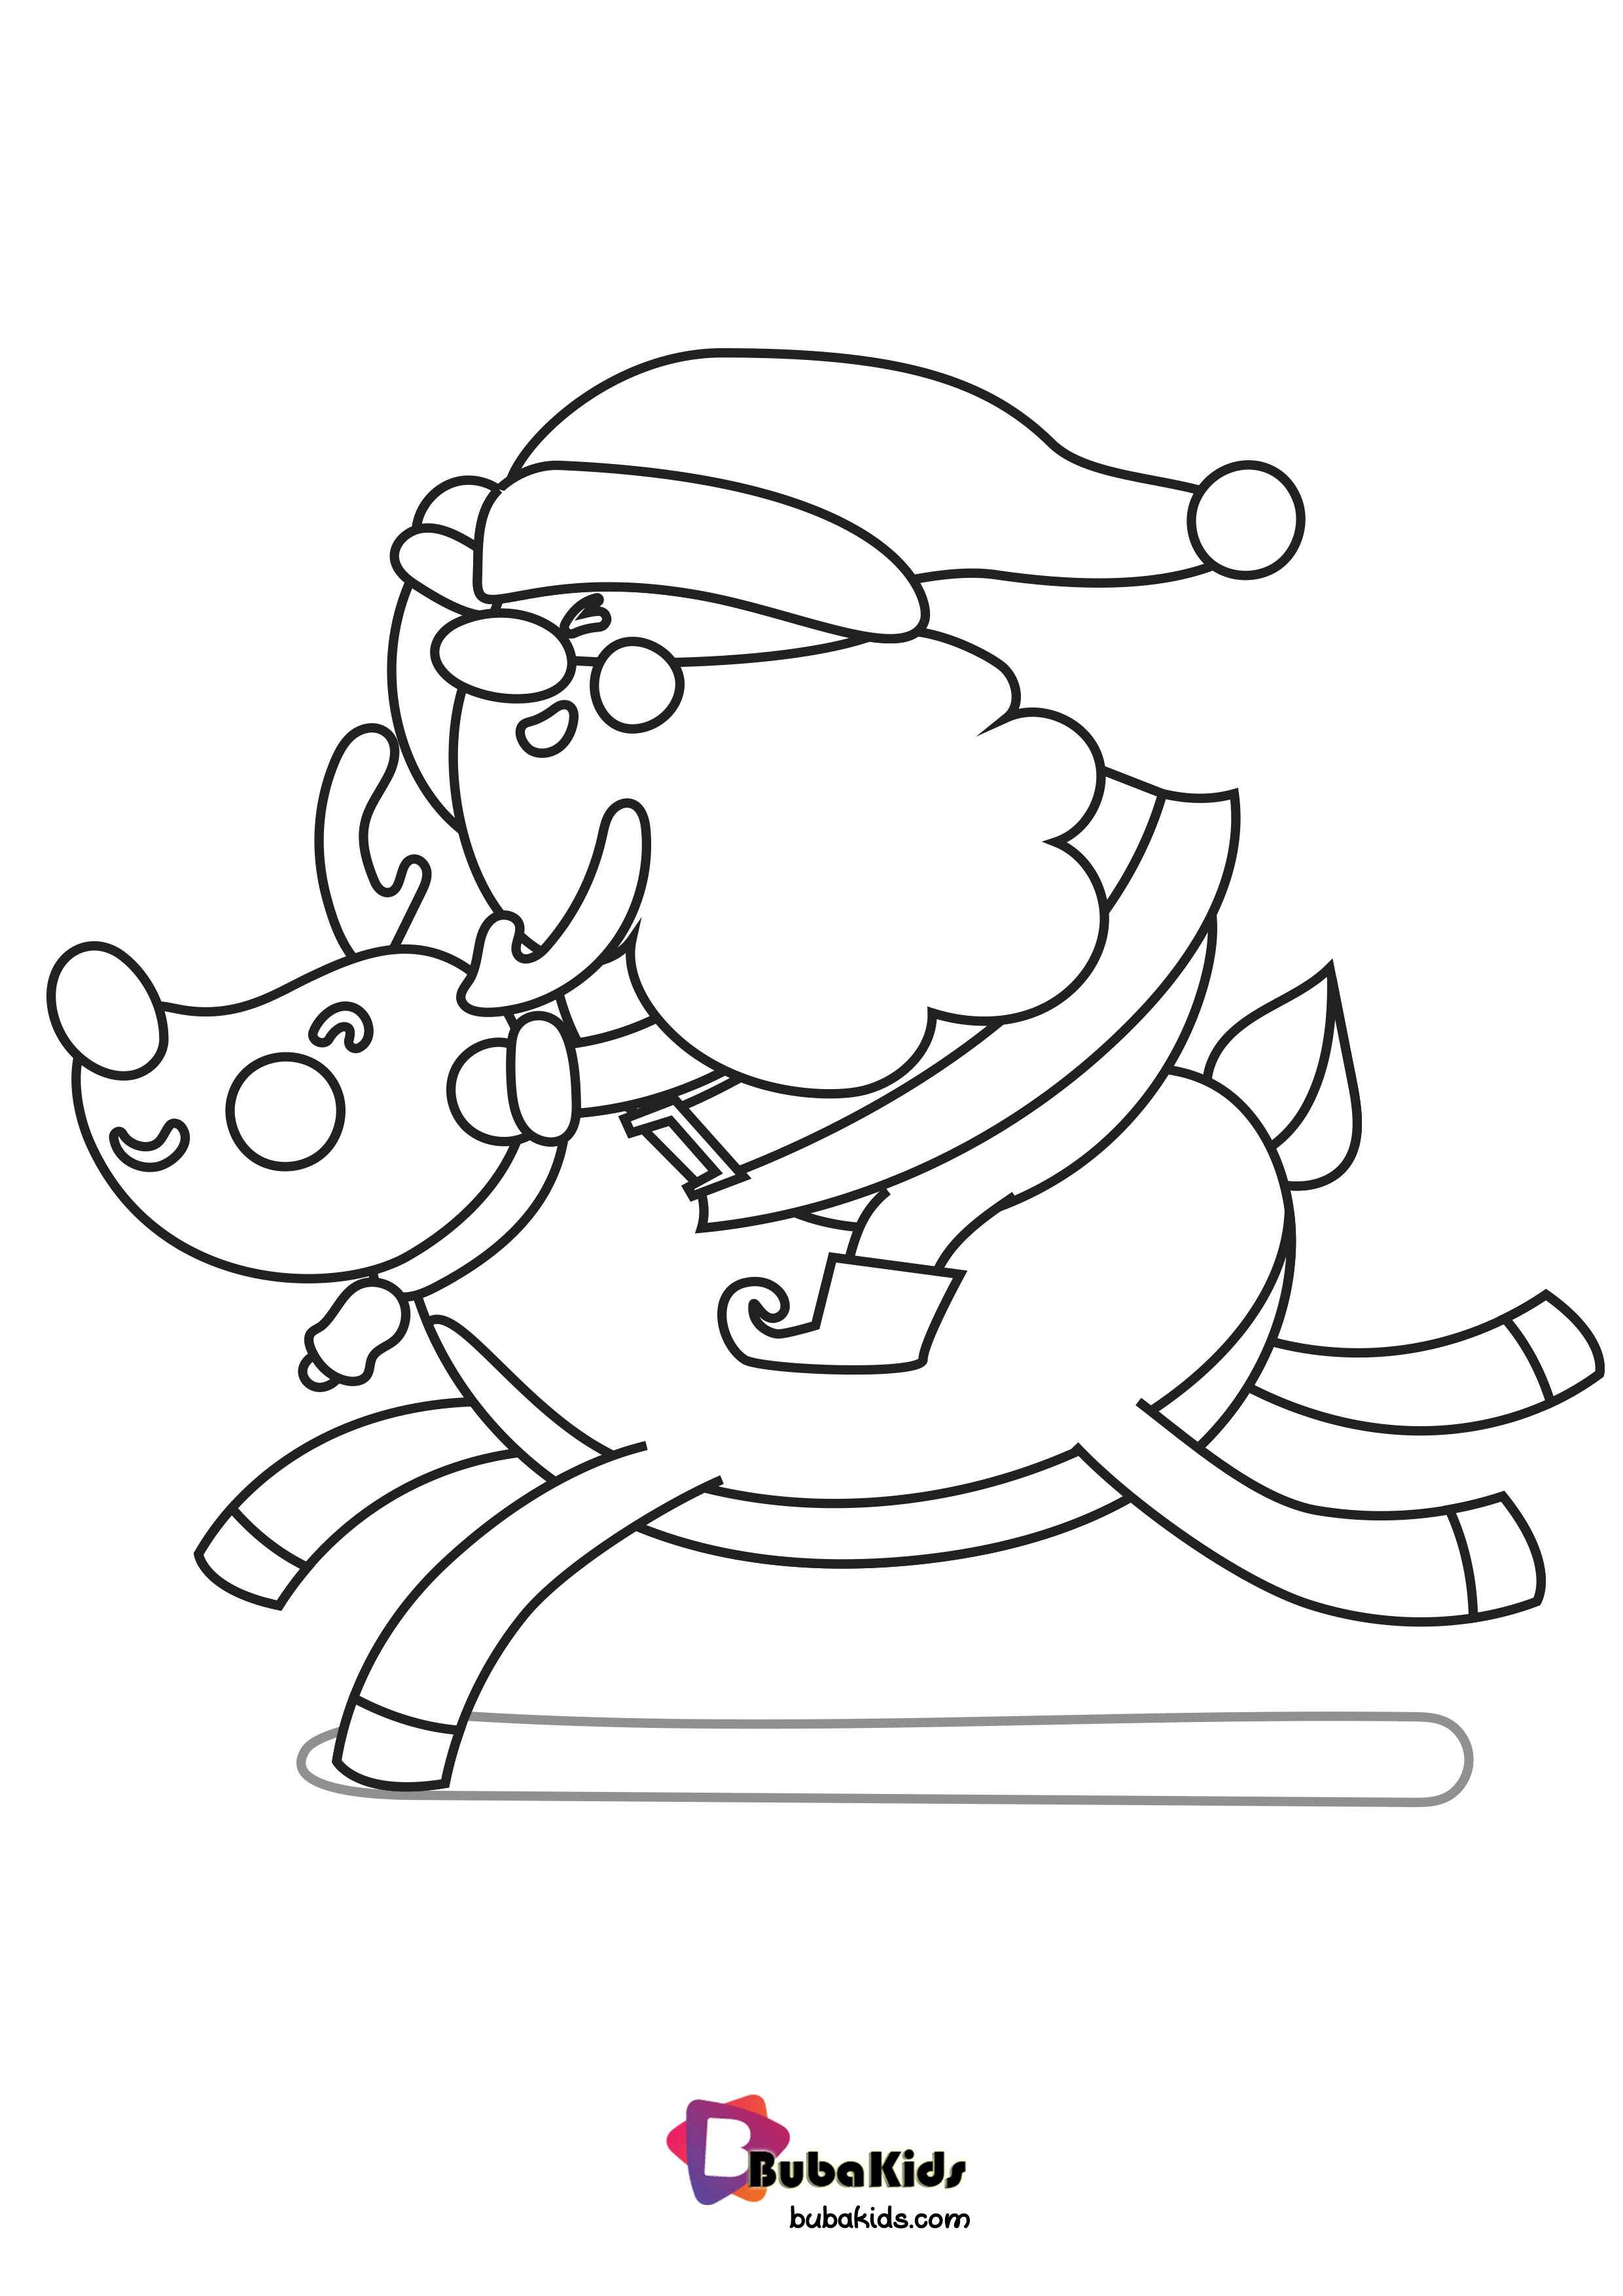 Santa and Deer Coloring Page Wallpaper